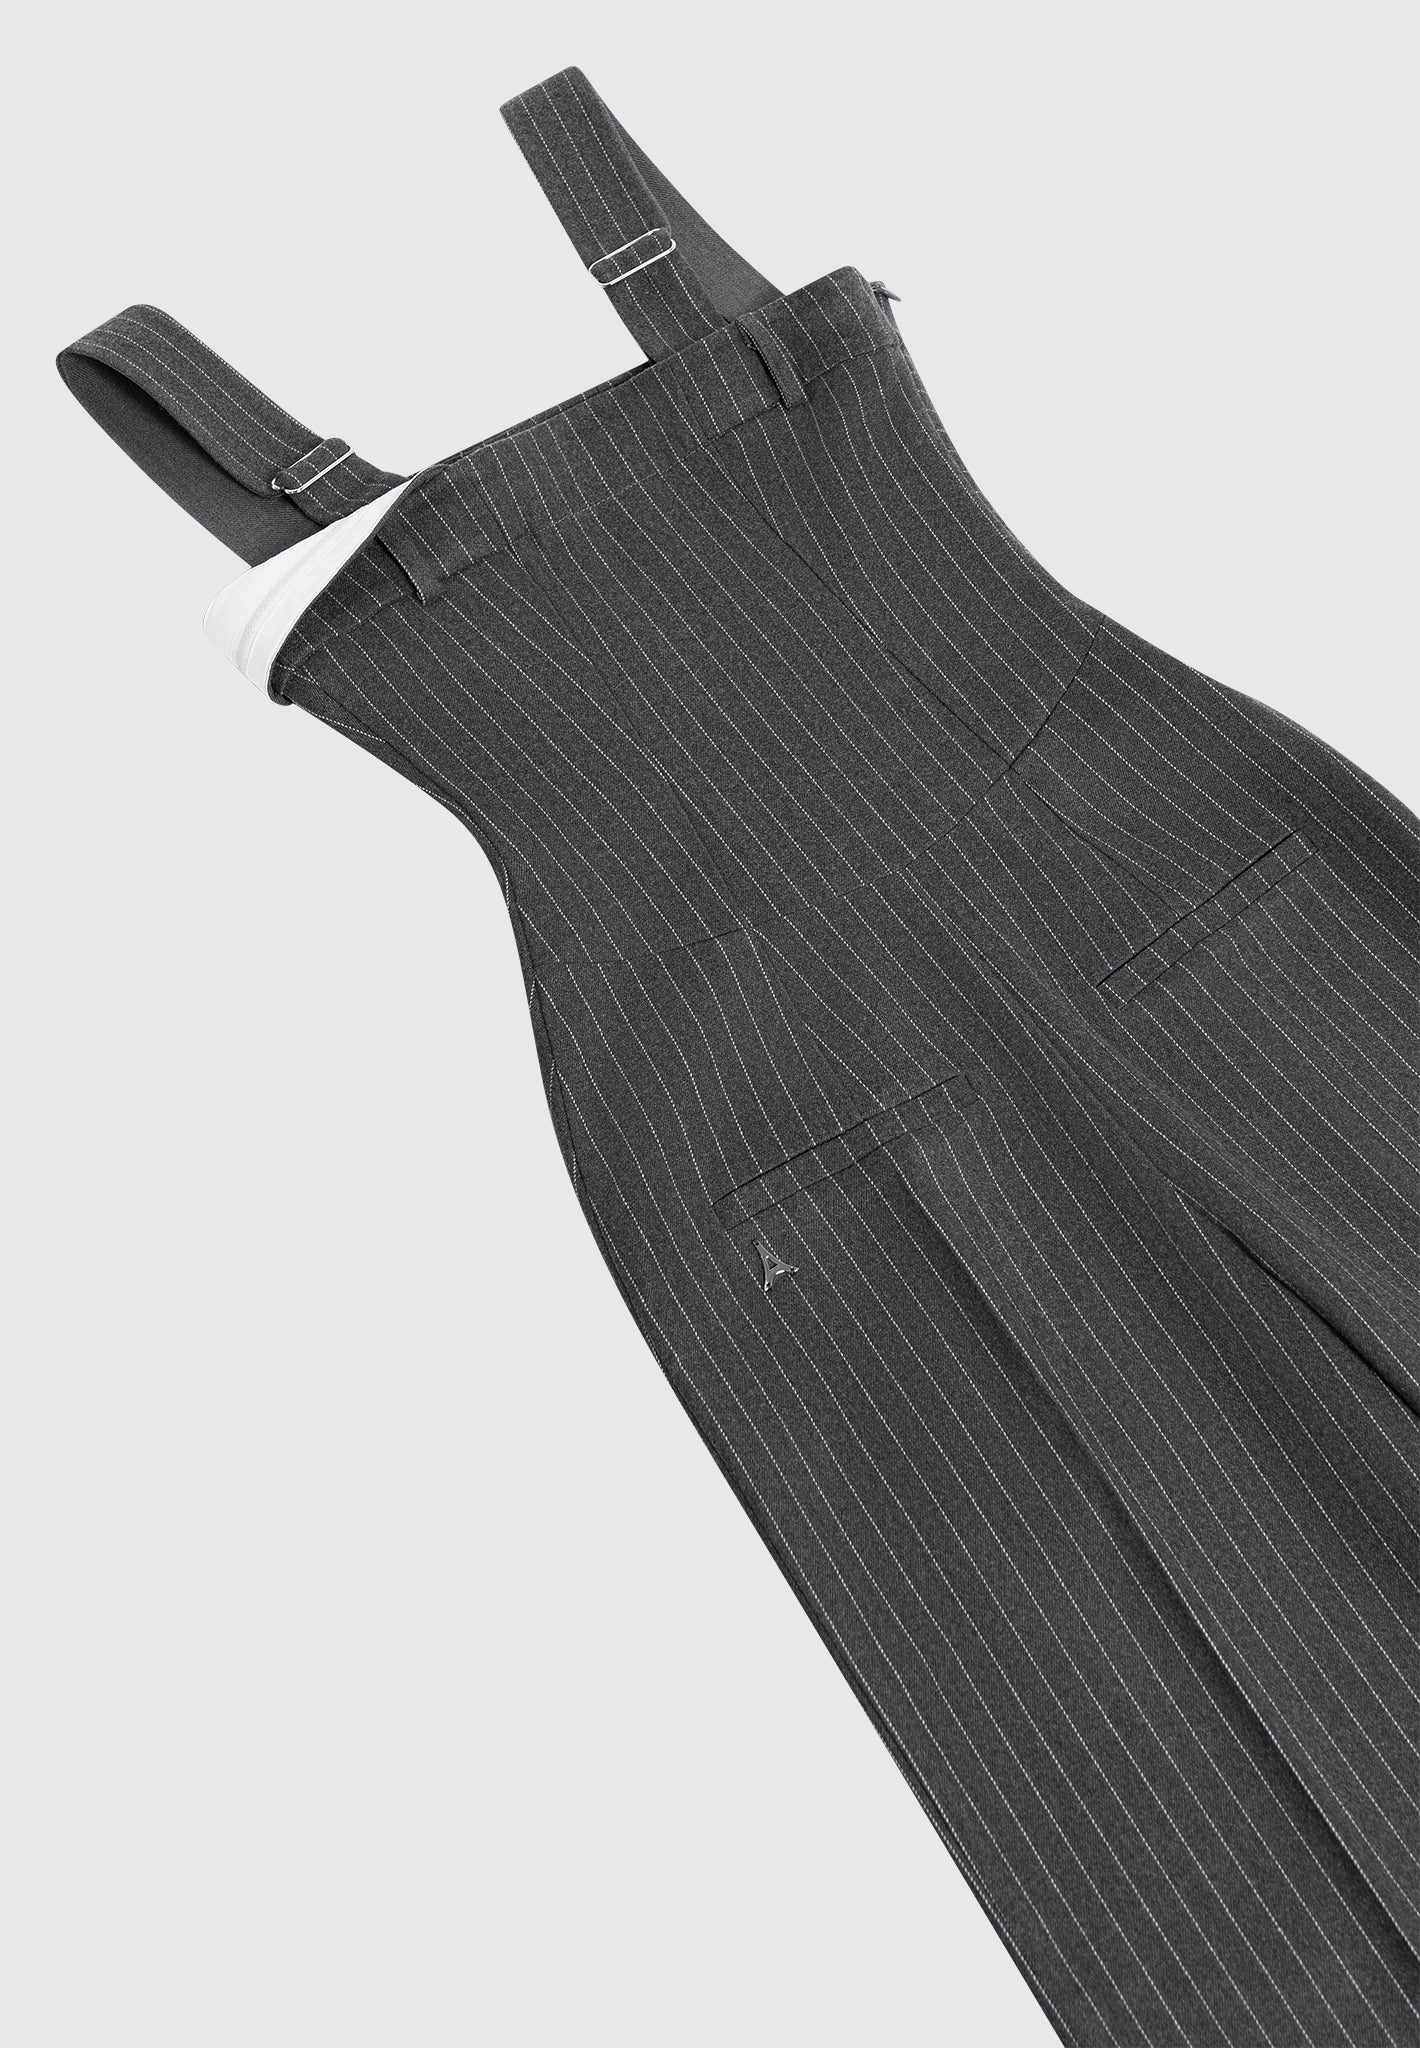 tailored-pinstripe-jumpsuit-grey